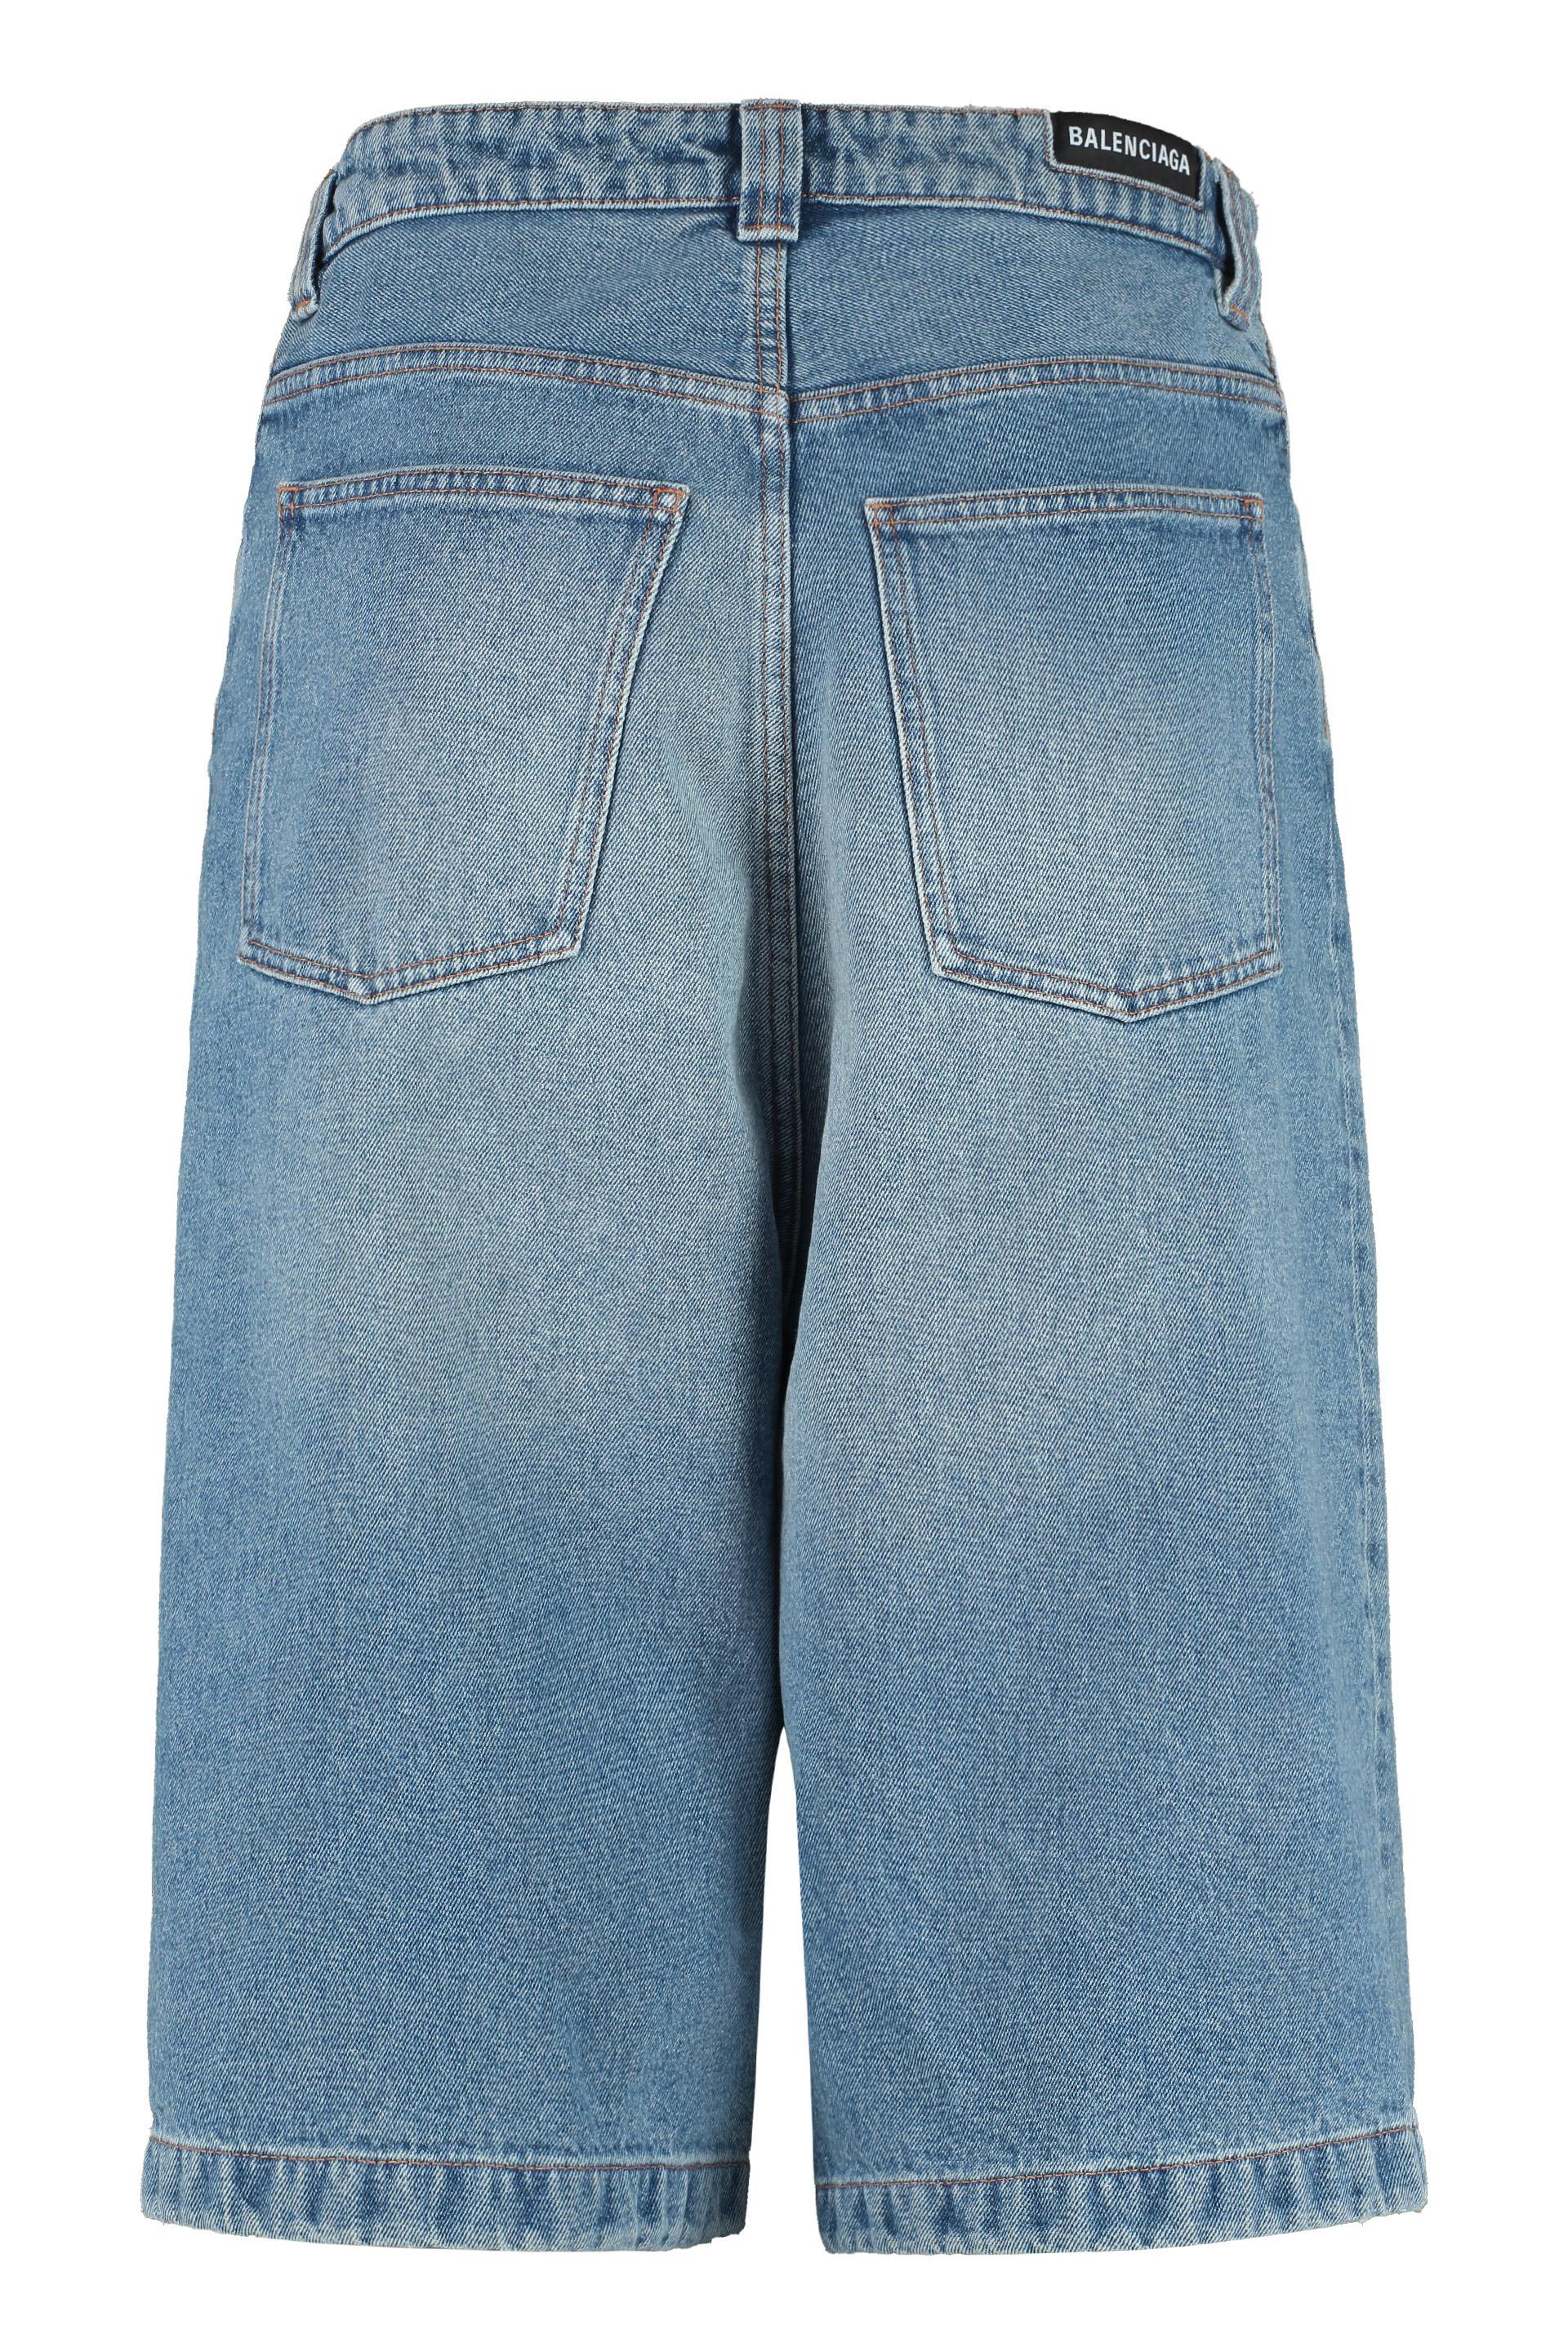 Balenciaga Cotton Denim Bermuda-shorts in Blue for Men - Lyst